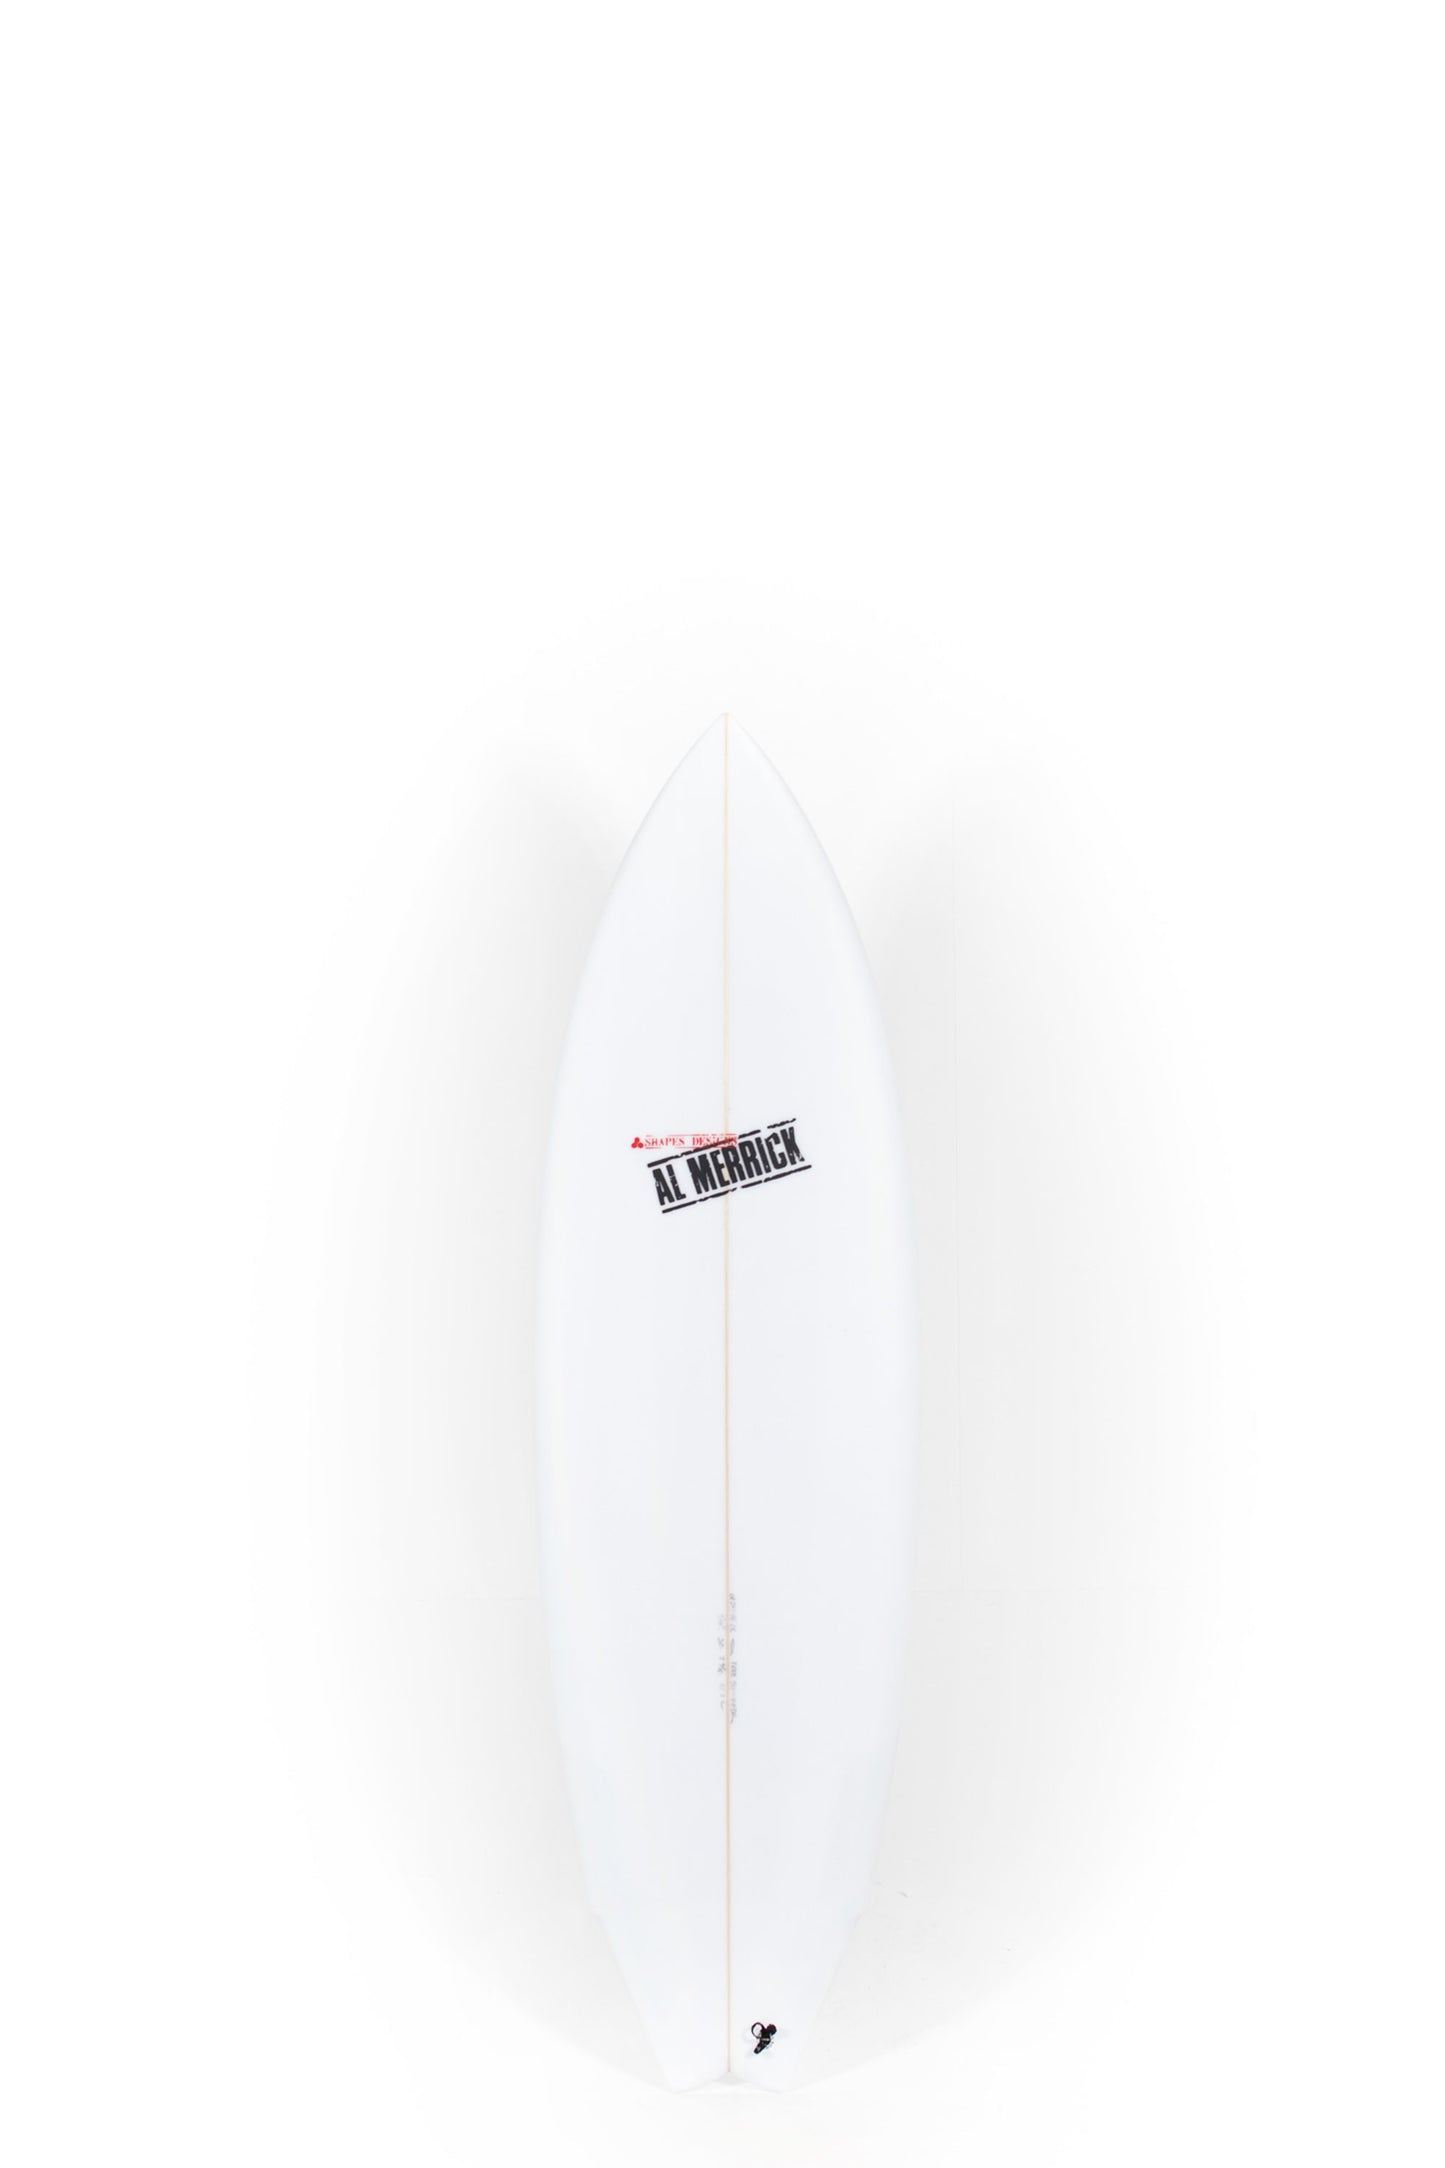 
                  
                    Pukas Surf Shop - Channel Islands - FREE SCRUBBER by Britt Merrick - 5'10" x 20 x 2 9/16 - 32,2L - CI21046
                  
                